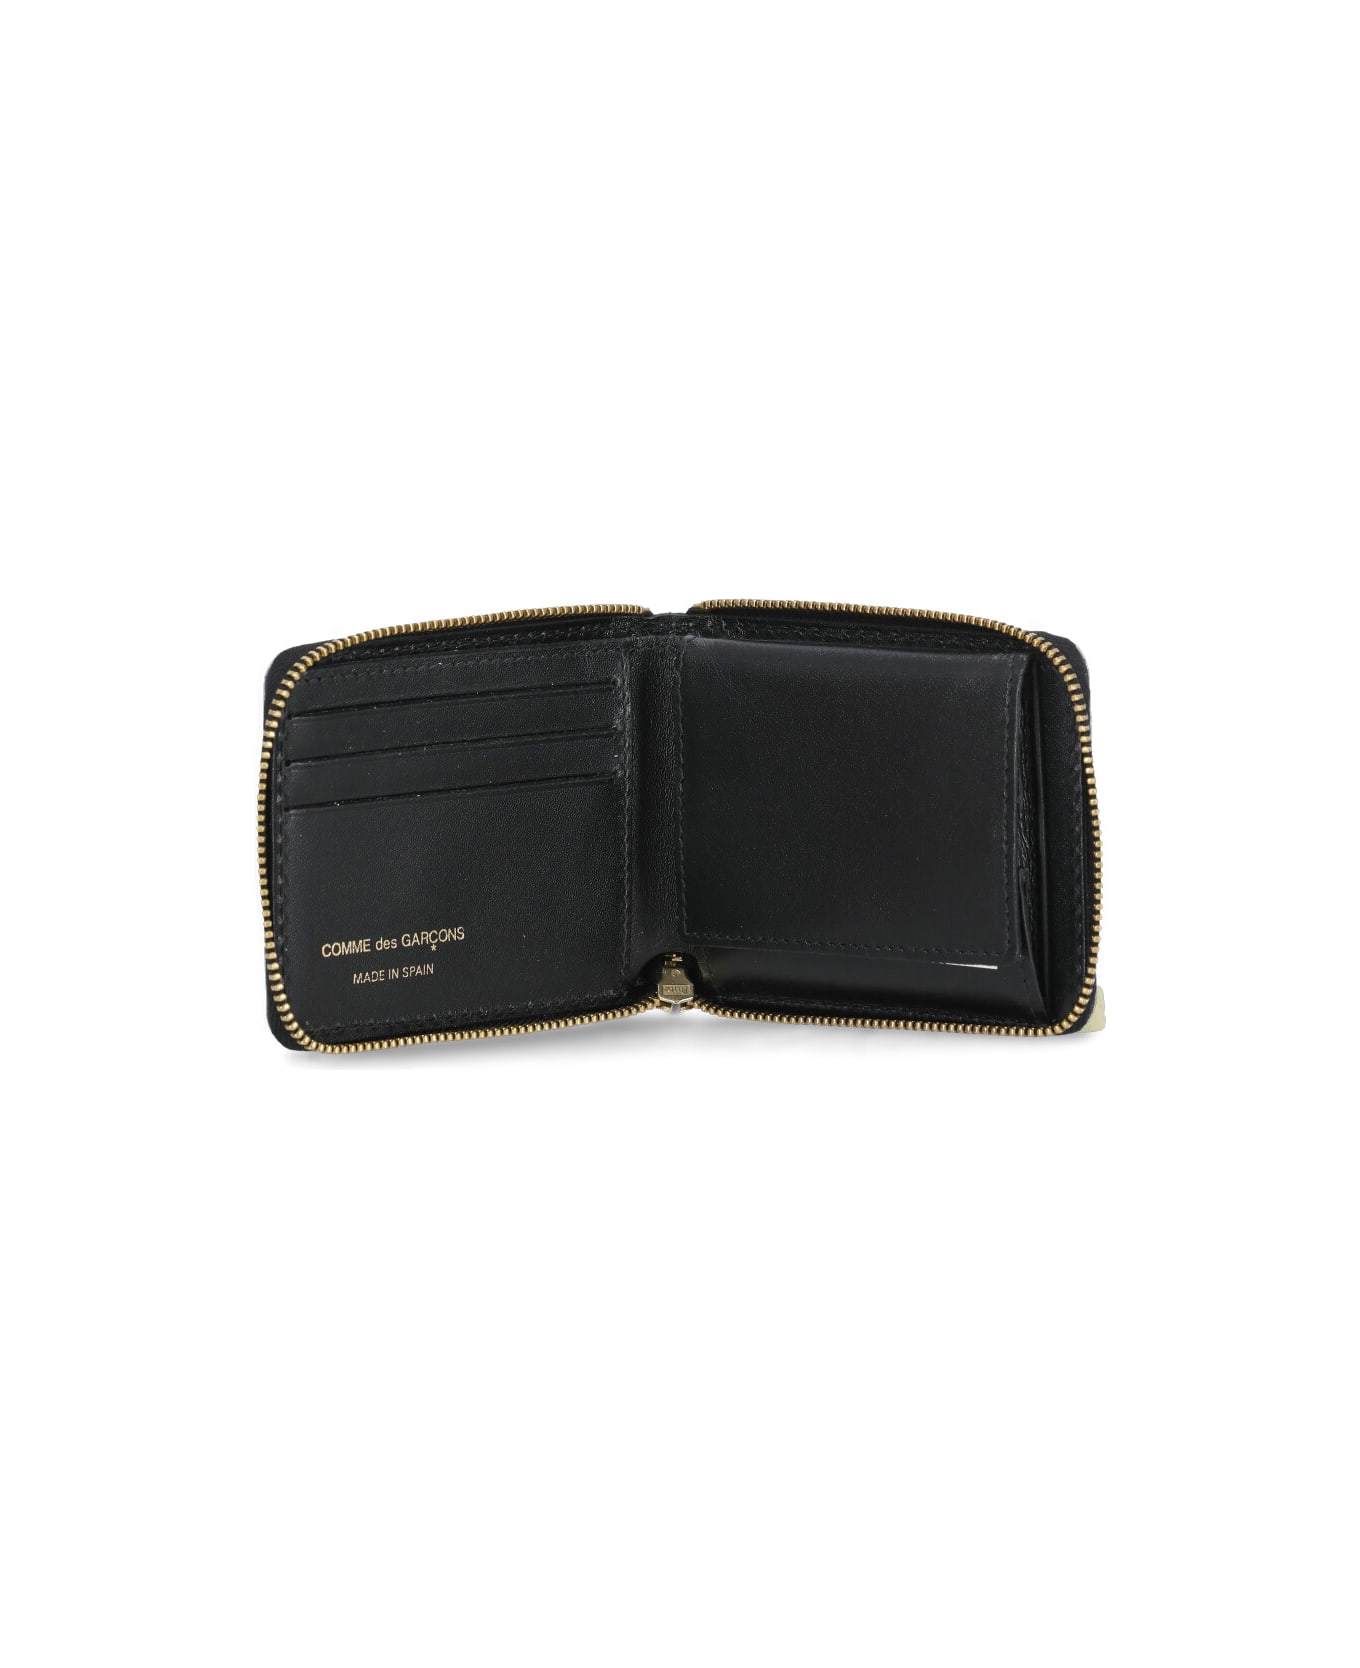 Comme des Garçons Wallet Wallet With A Tartan Pattern Wallet - RED/YELLOW 財布